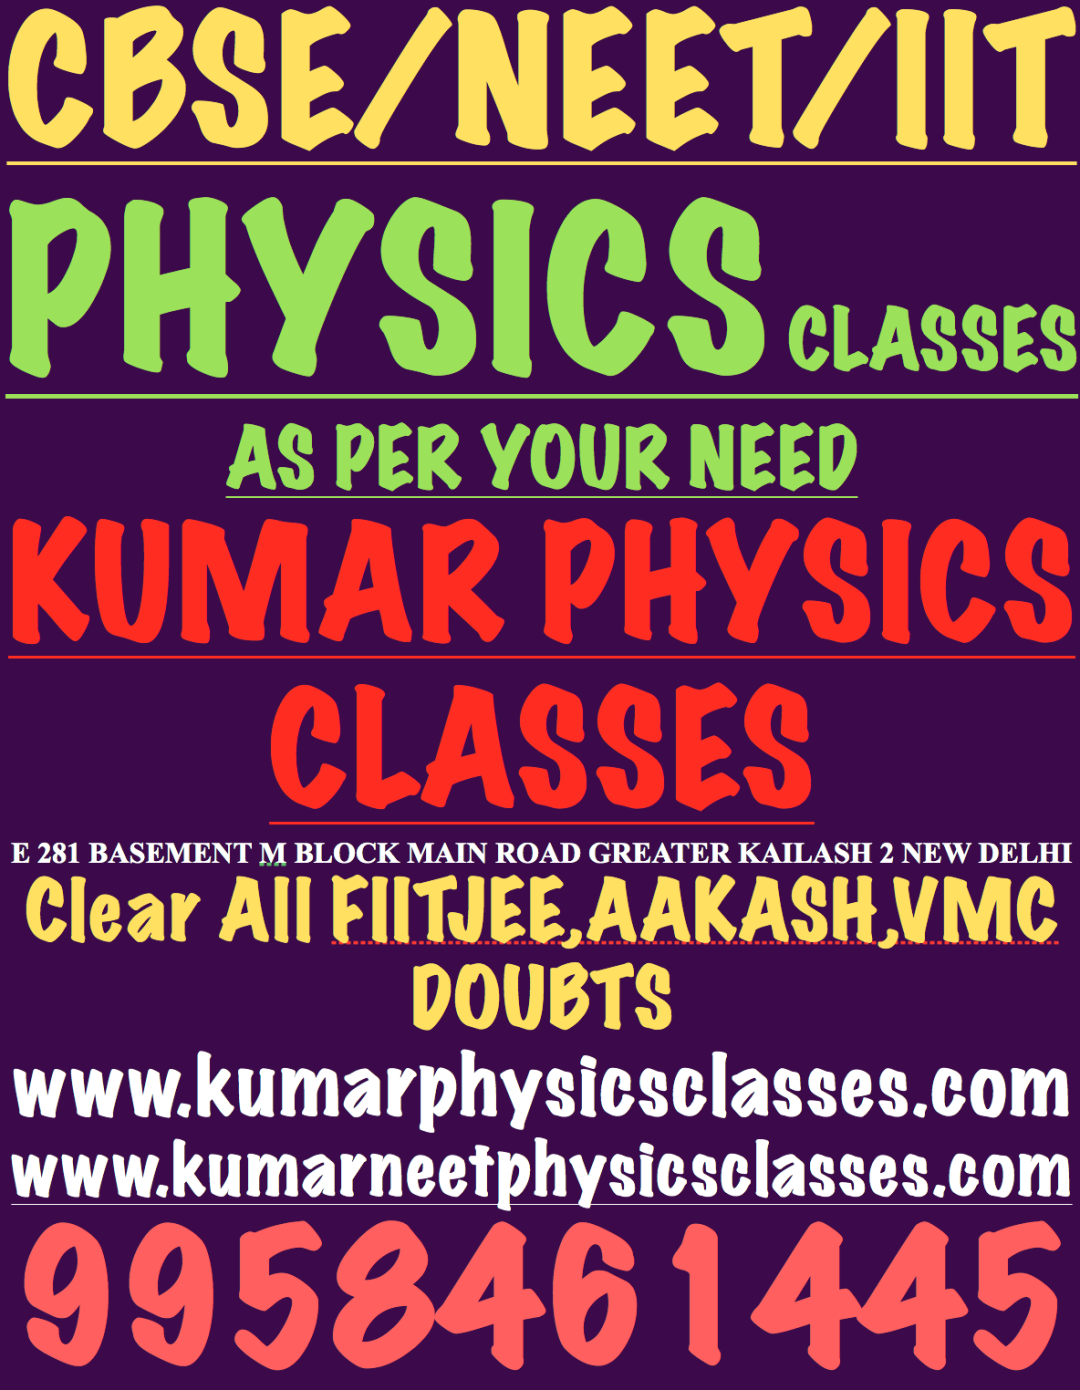 Kumar Physics classes-www.kumarphysicsclasses.com